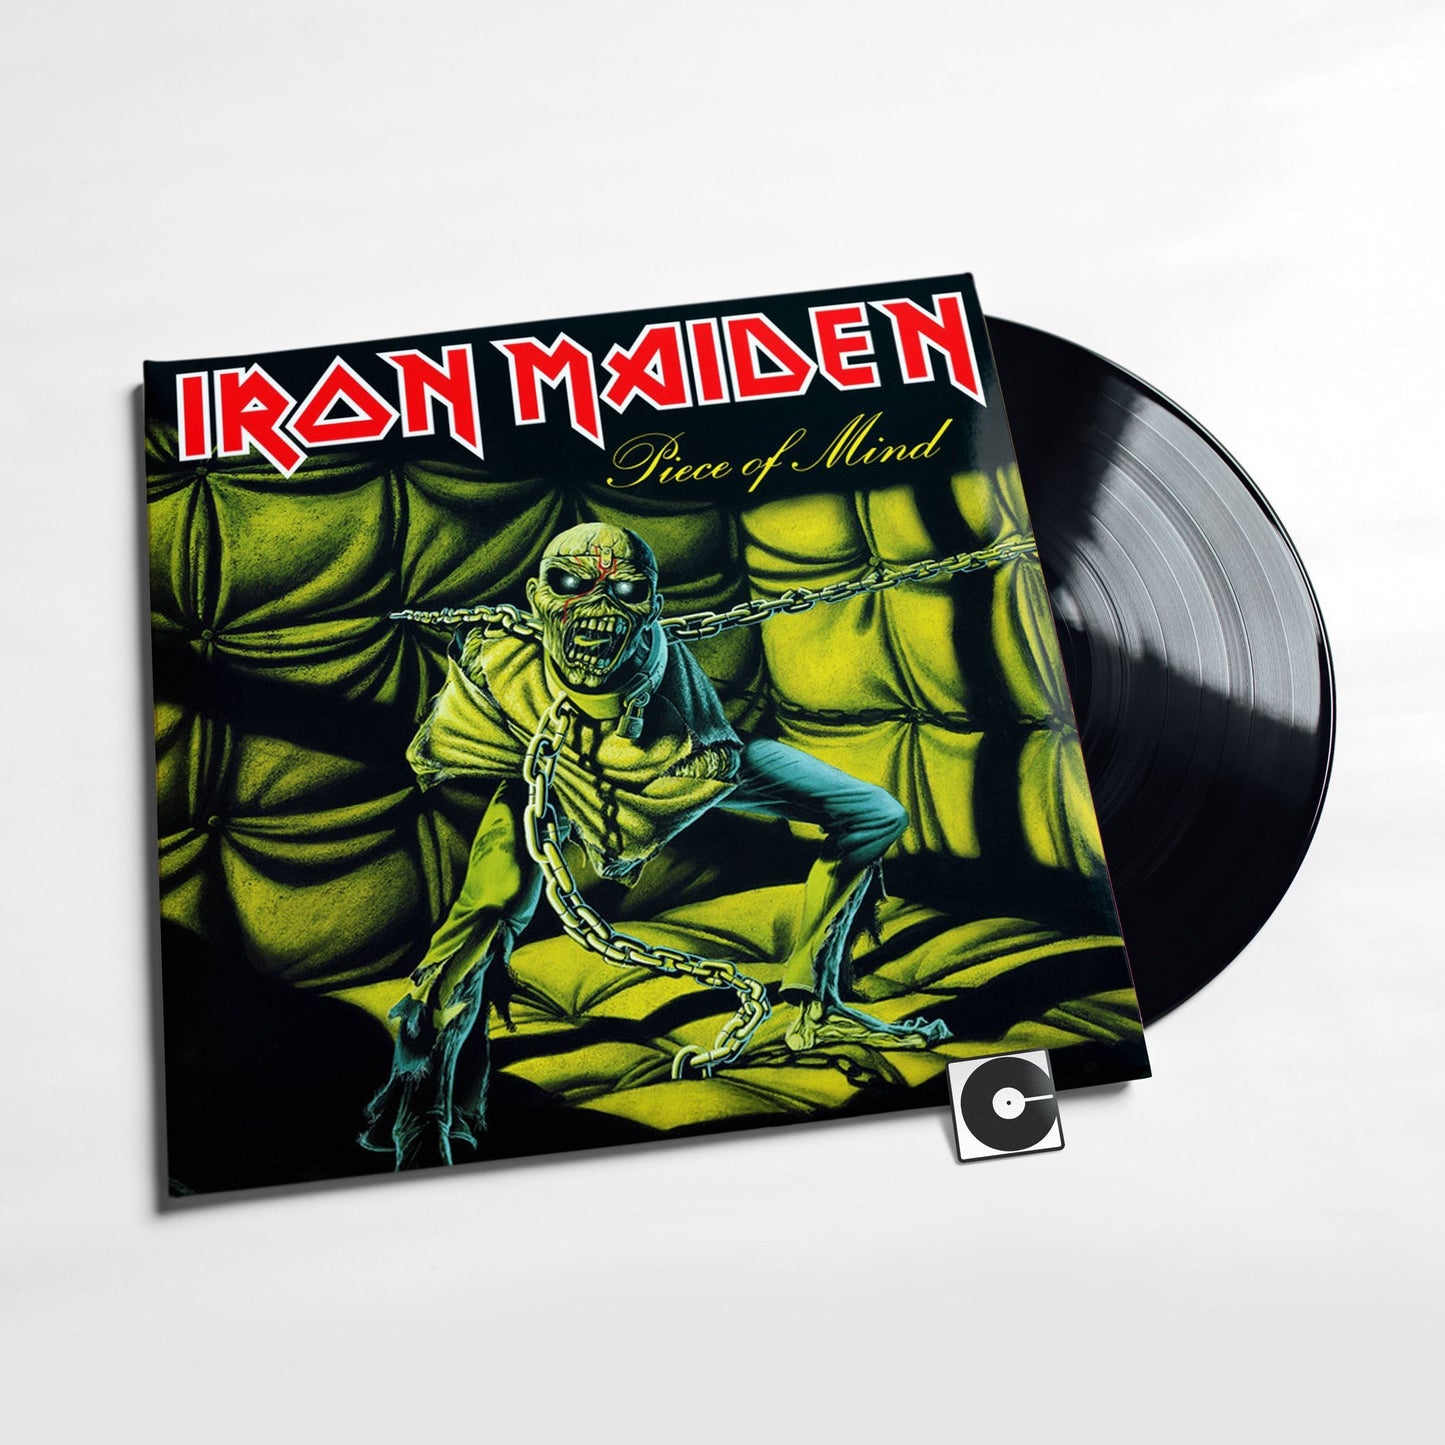 Iron Maiden - "Piece Of Mind"